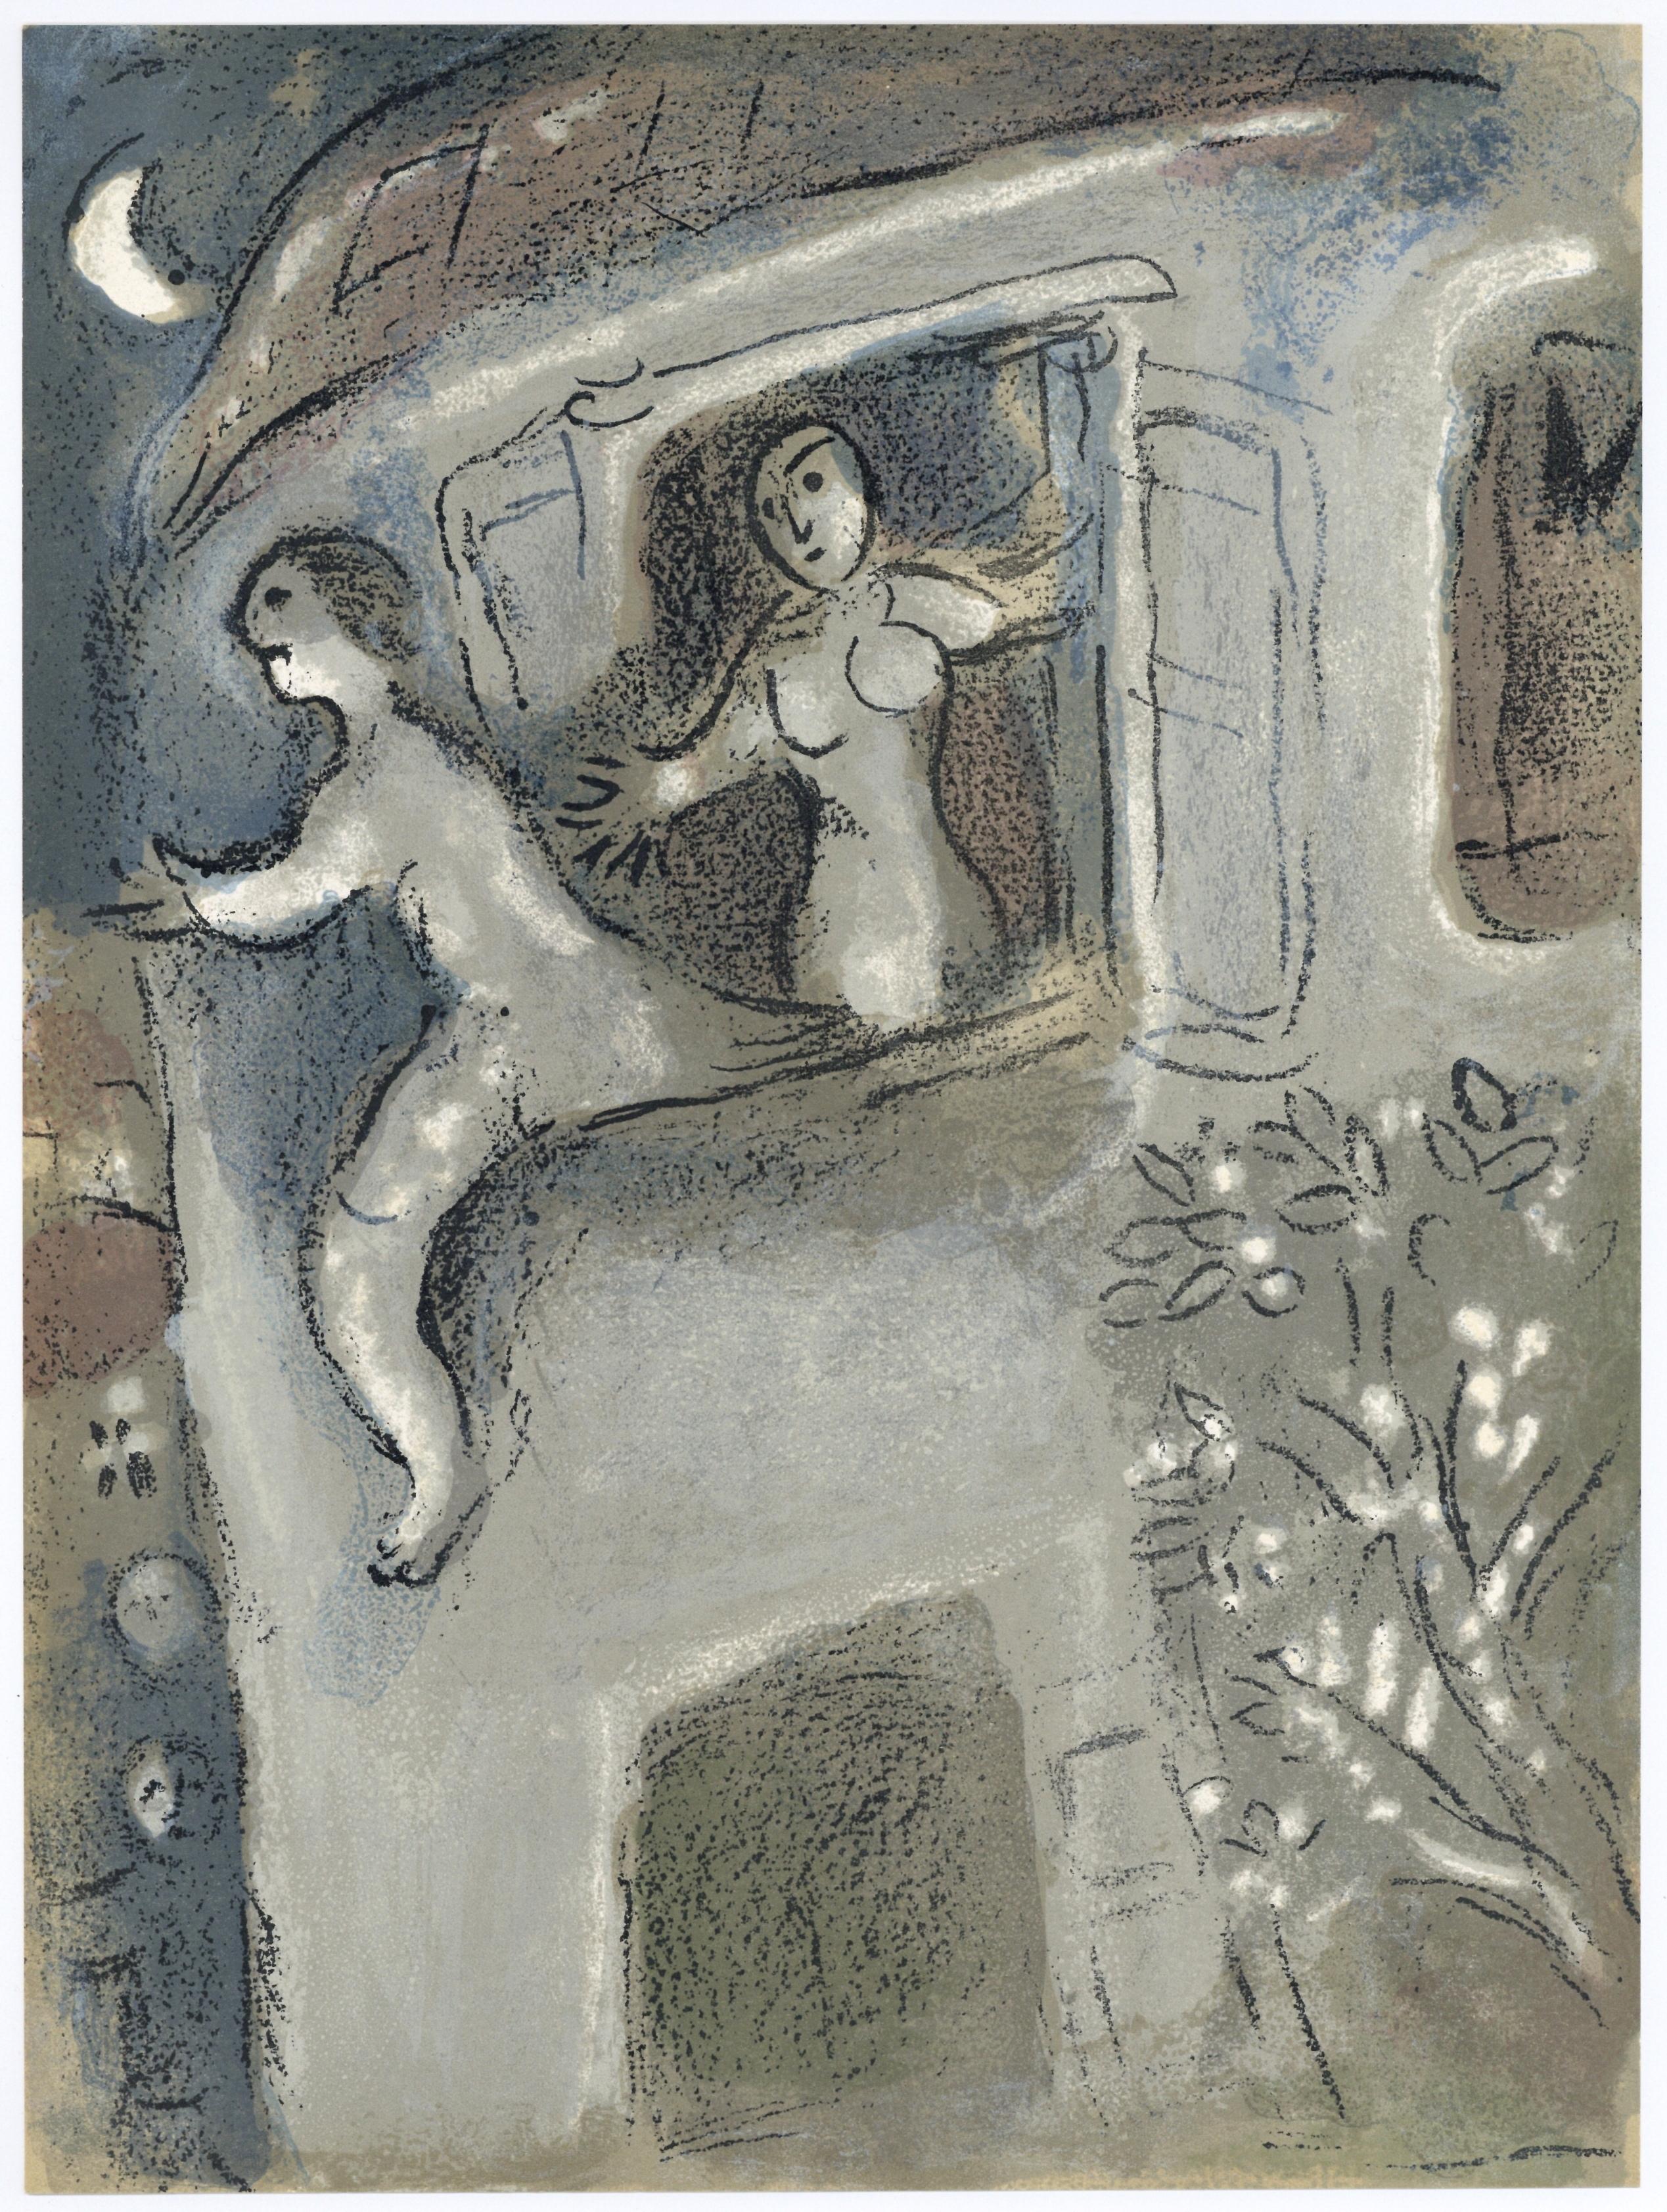 Marc Chagall Portrait Print - "Micah Rescues David from Saul" original lithograph